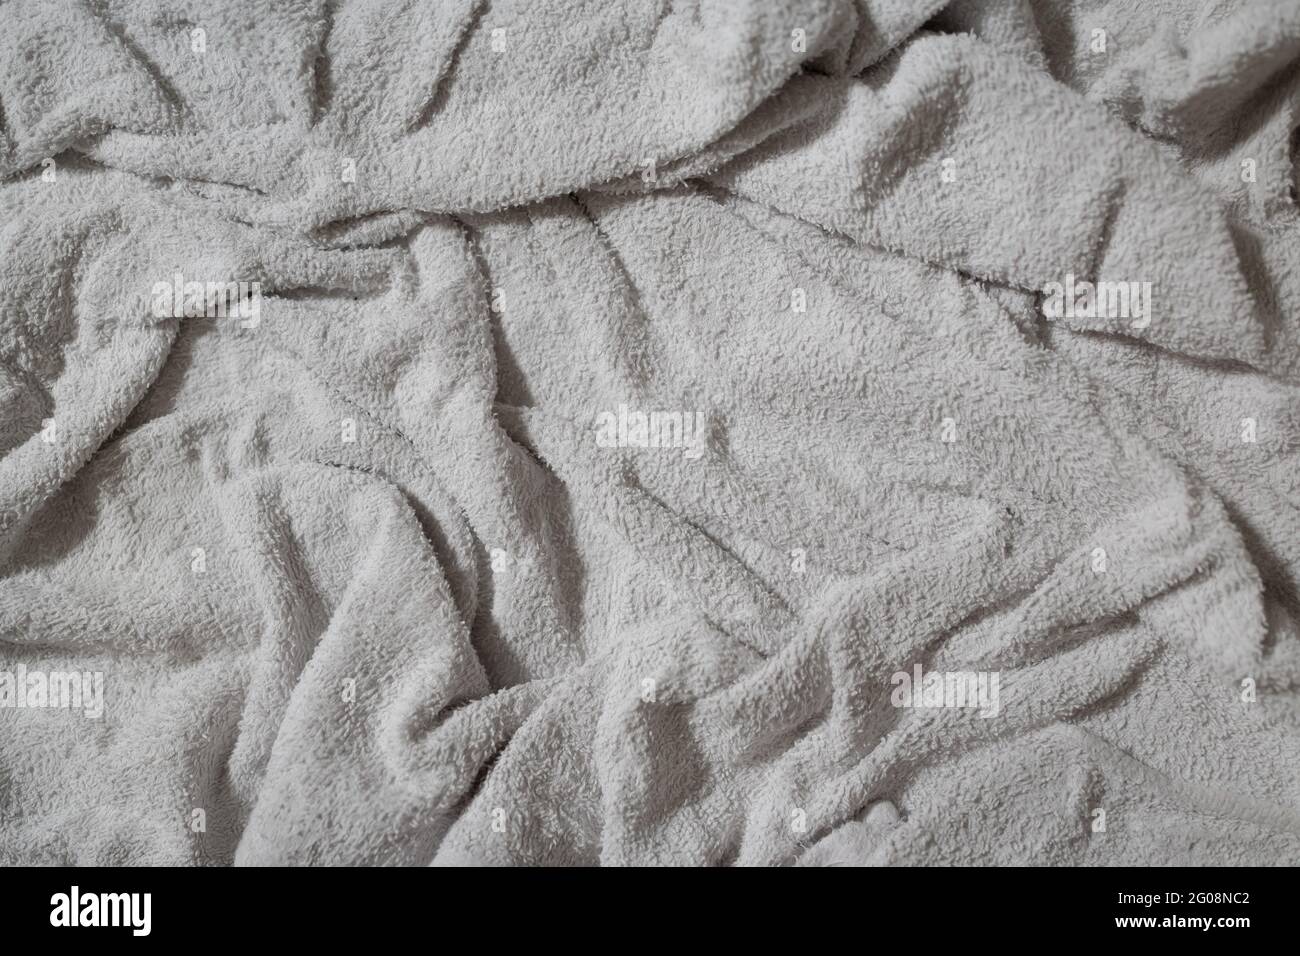 Crumpled white towel texture background Stock Photo